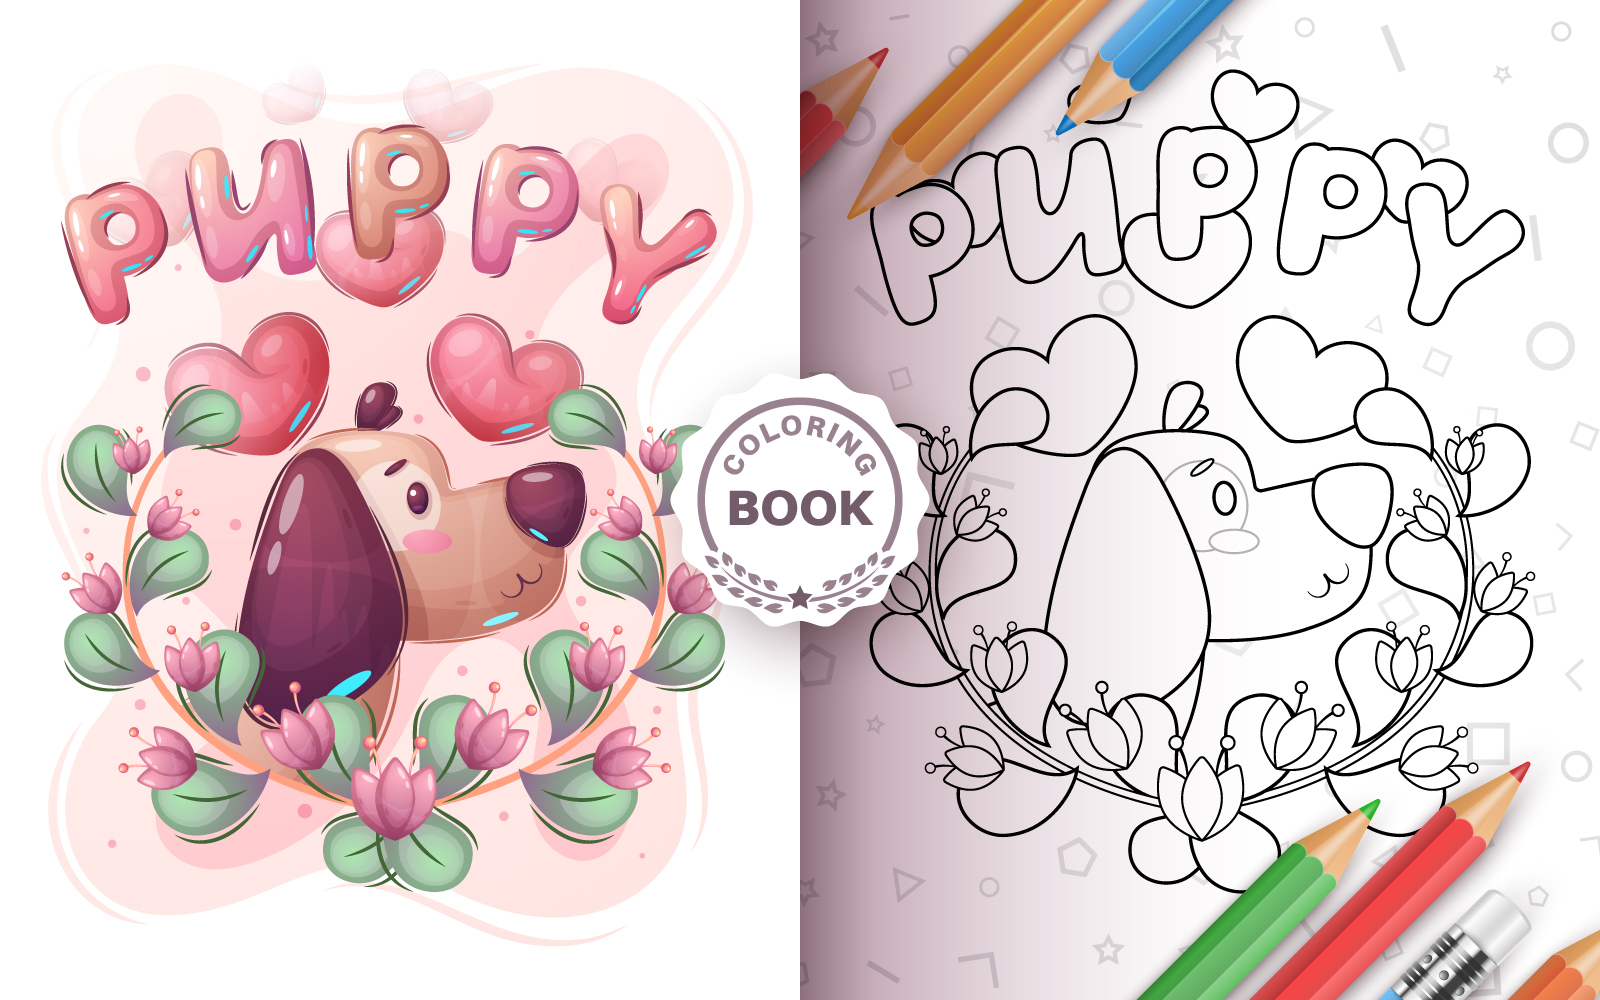 Dog in Flower - Game For Kids, Coloring Book, Graphics Illustration